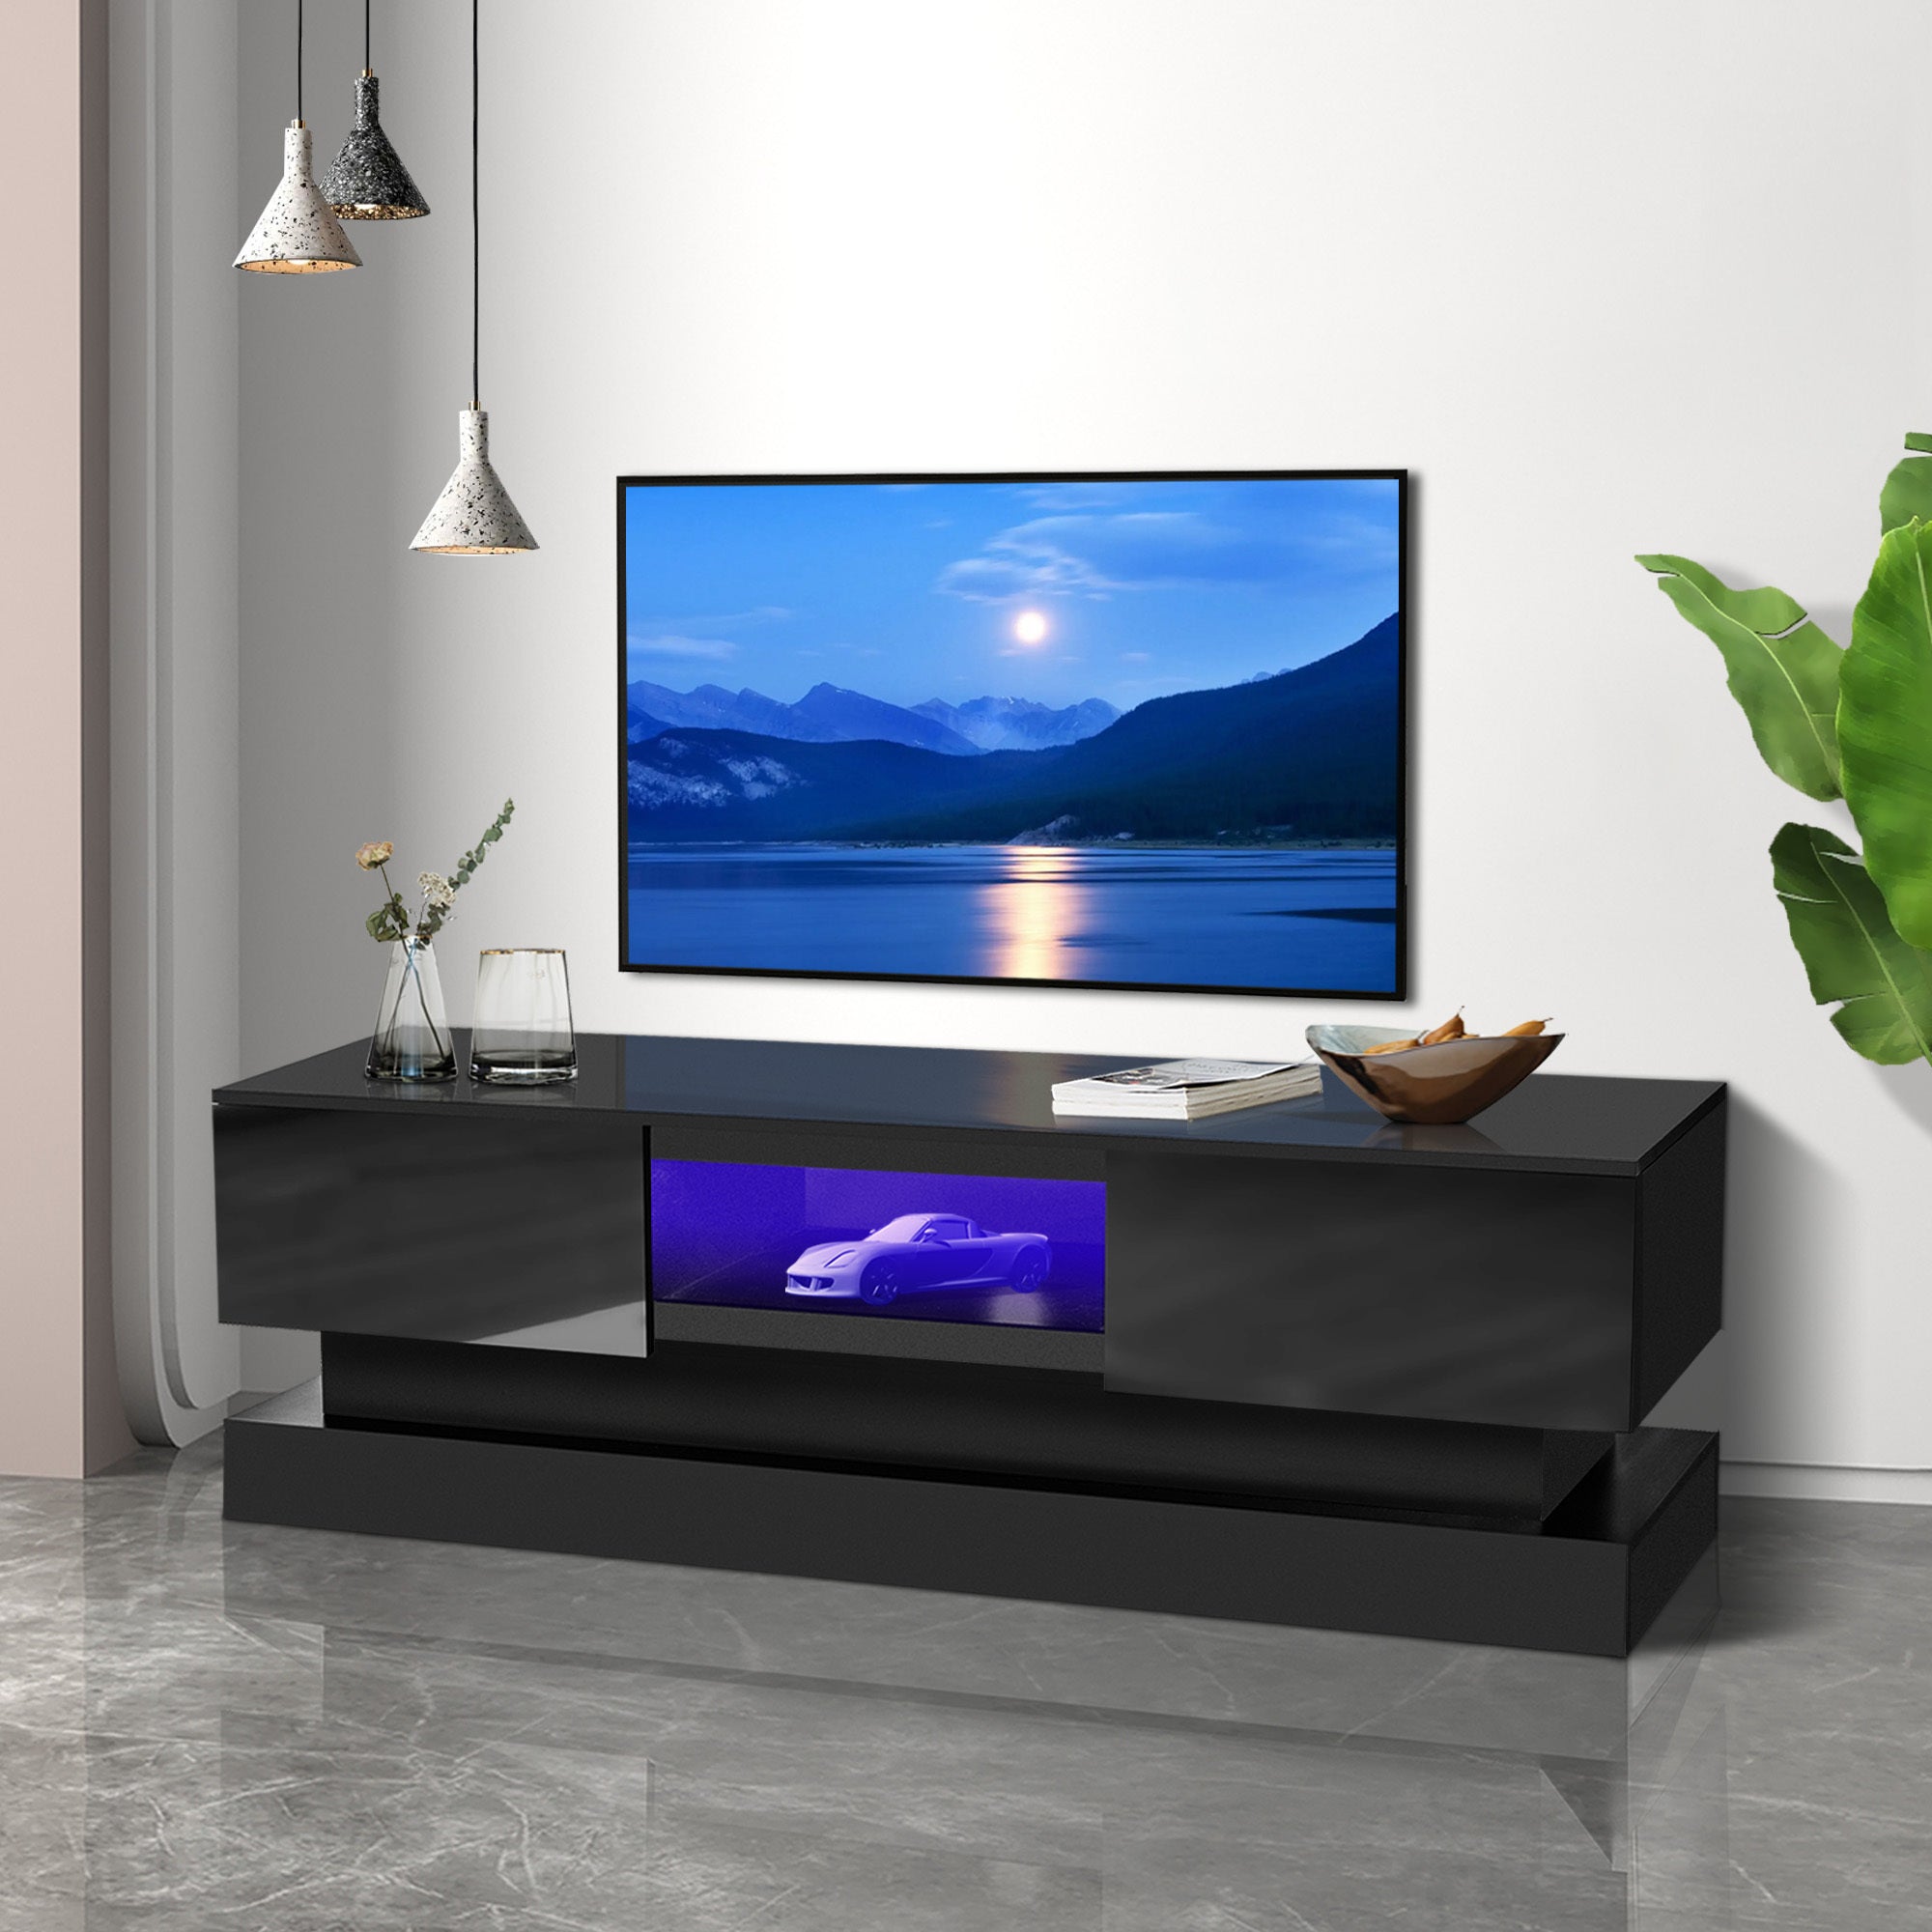 1.3M Black Modern TV Stand with LED Light (Black)